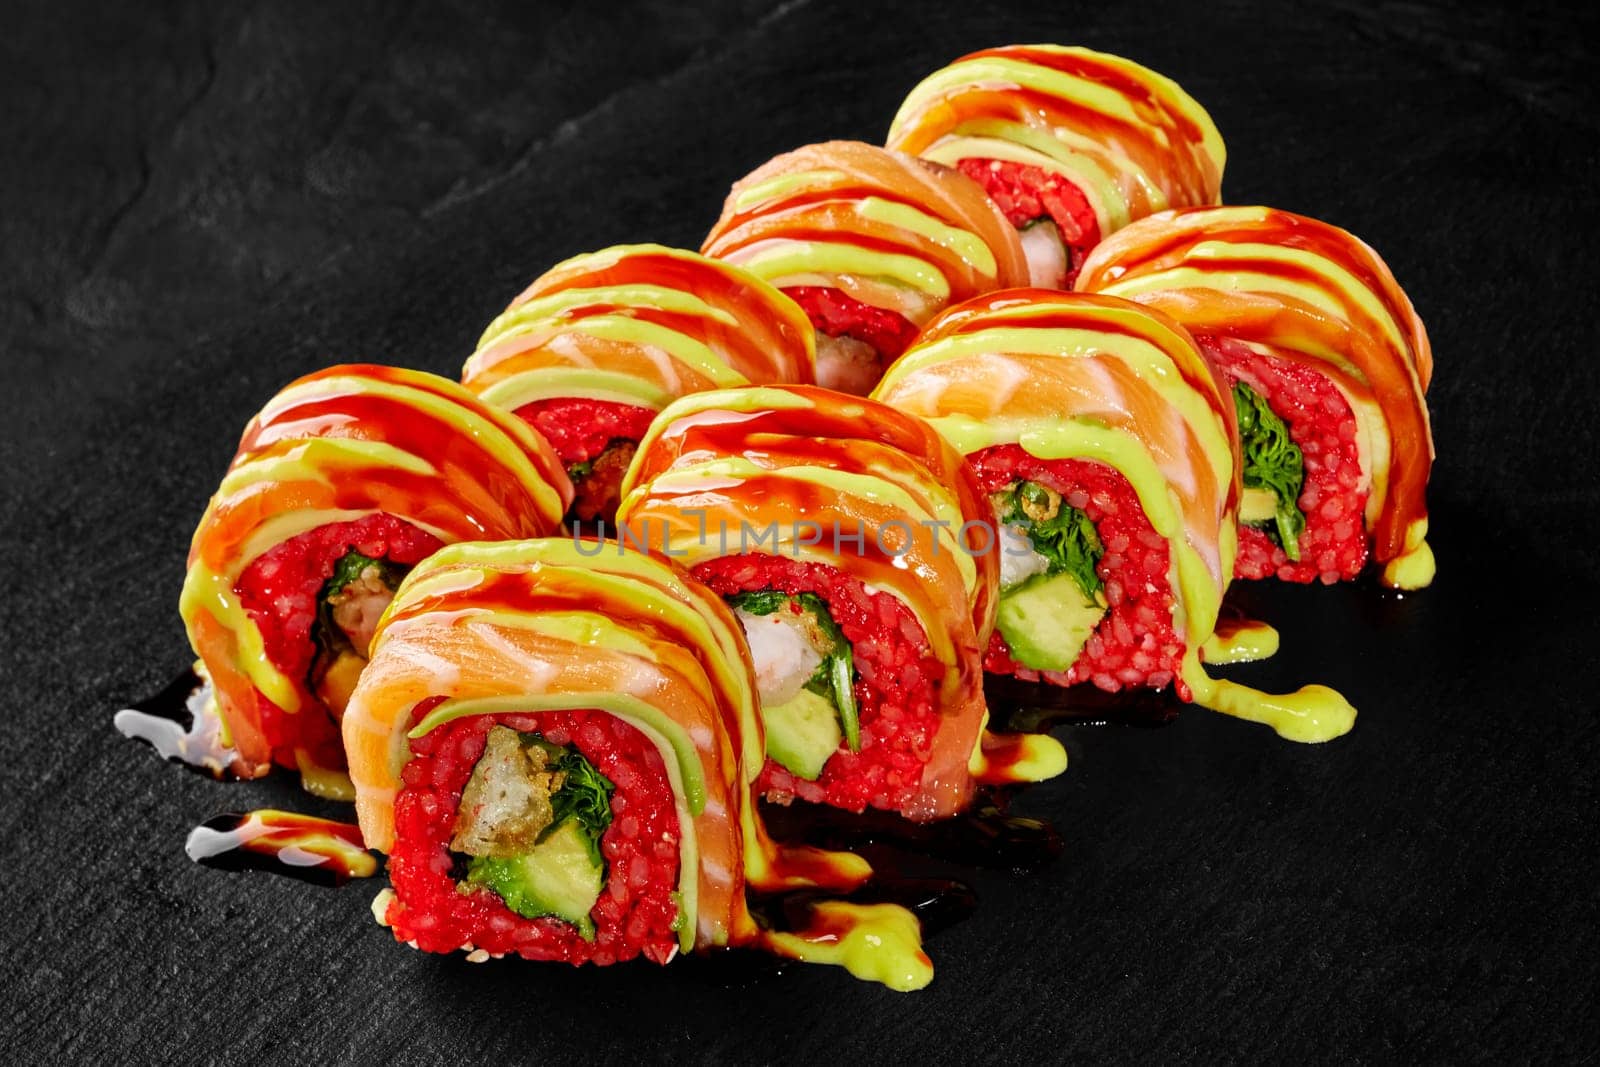 Colorful red rice uramaki rolls with shrimp tempura, salmon and sauces by nazarovsergey